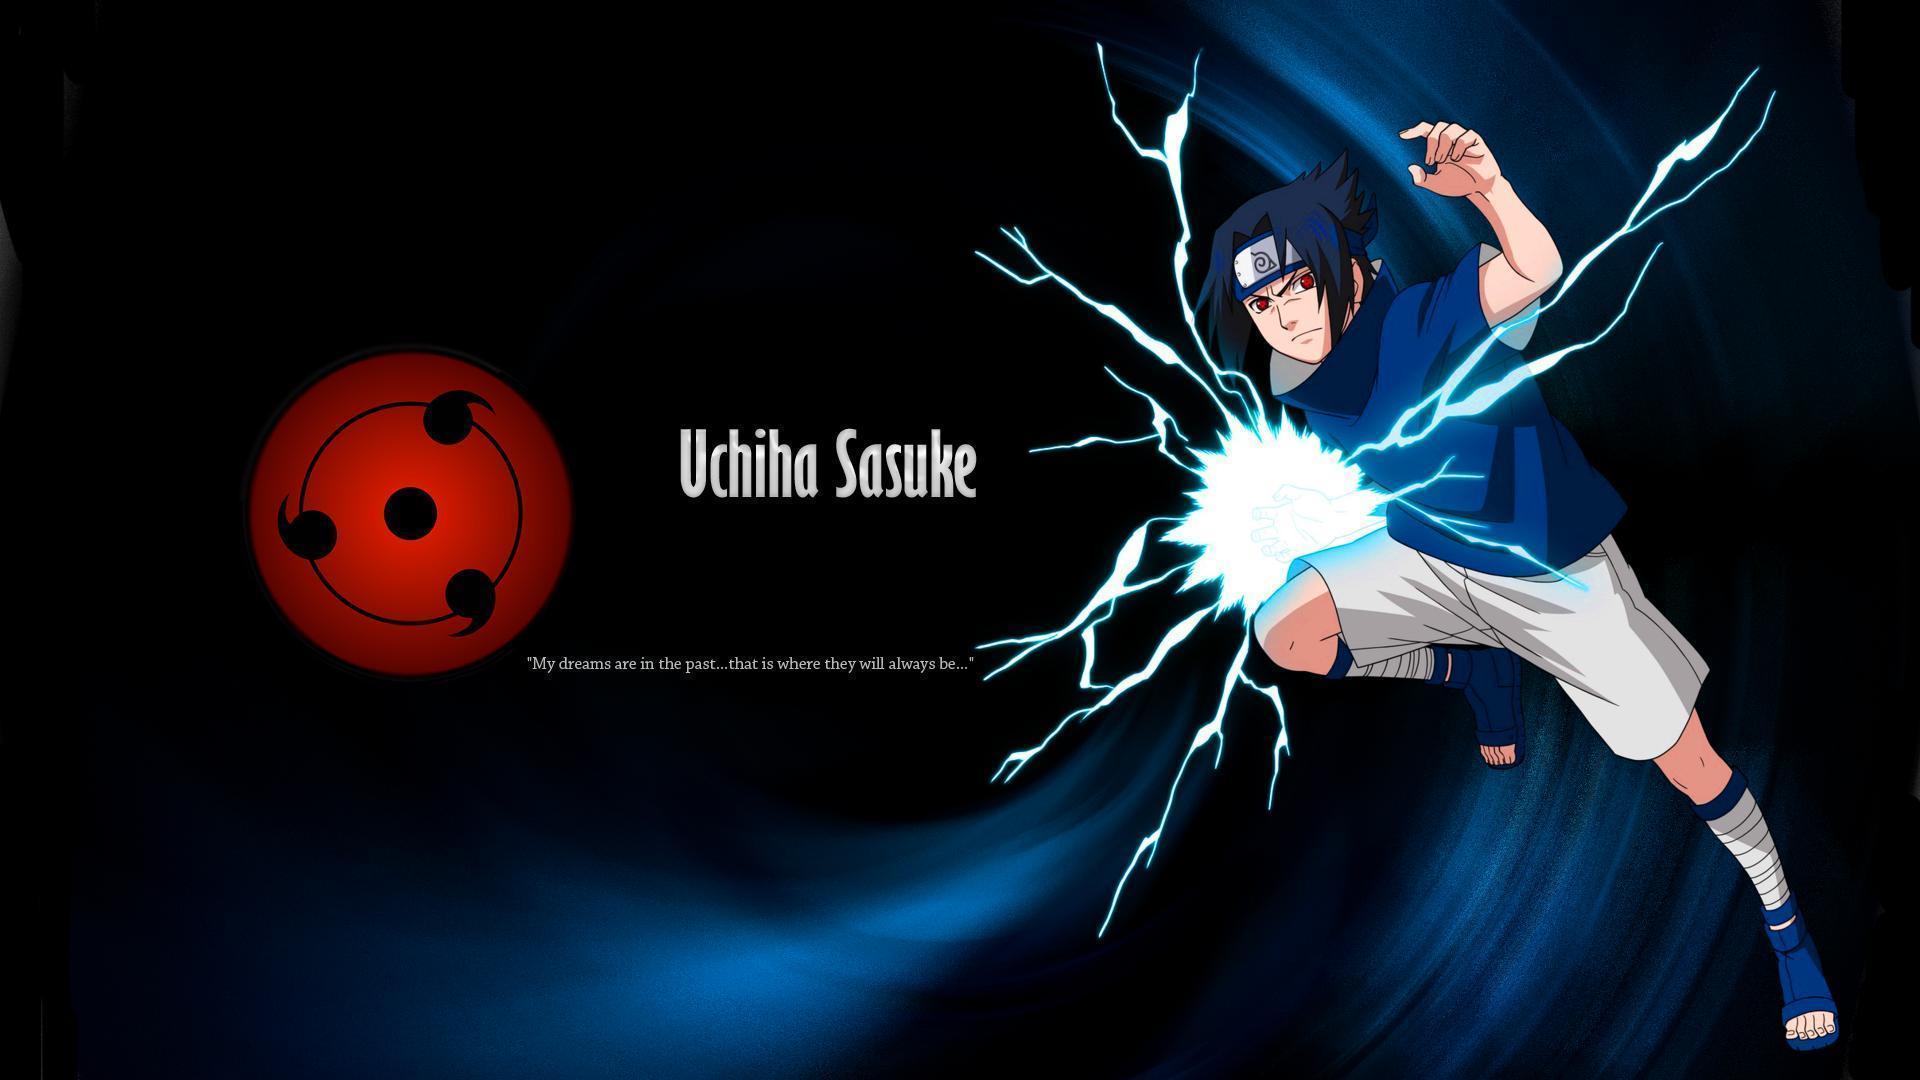 Sasuke Background High Quality. Wallpaper, Background, Image